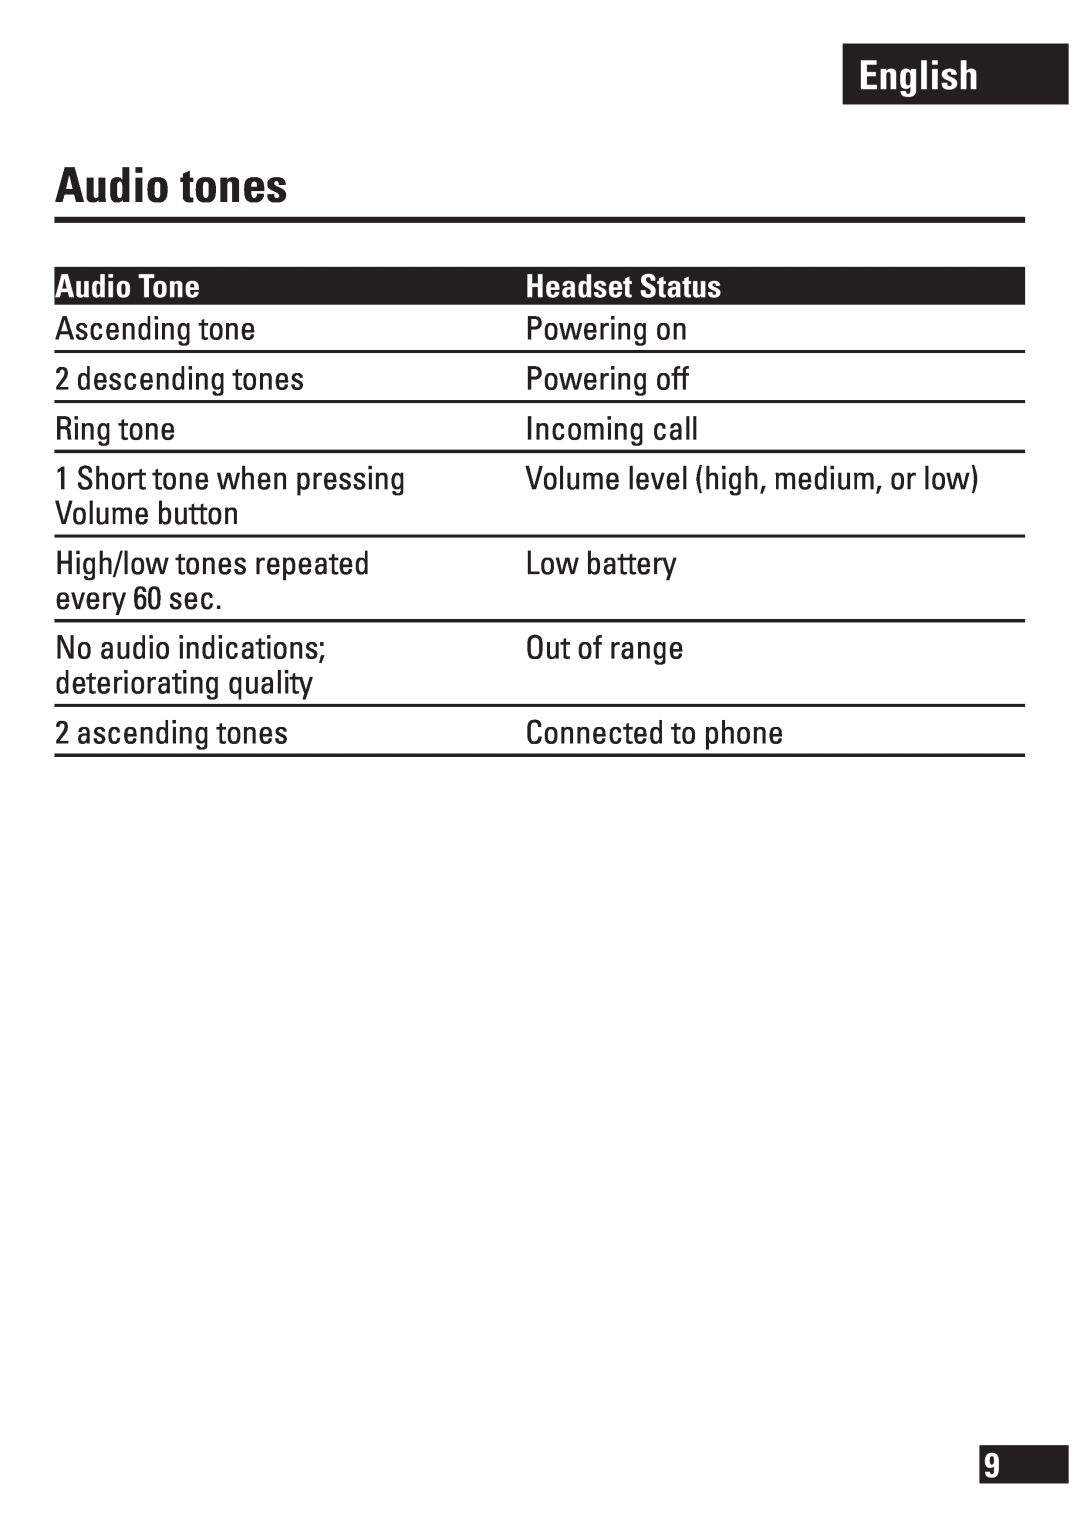 Motorola H270 manual Audio tones, Audio Tone, English, Headset Status 